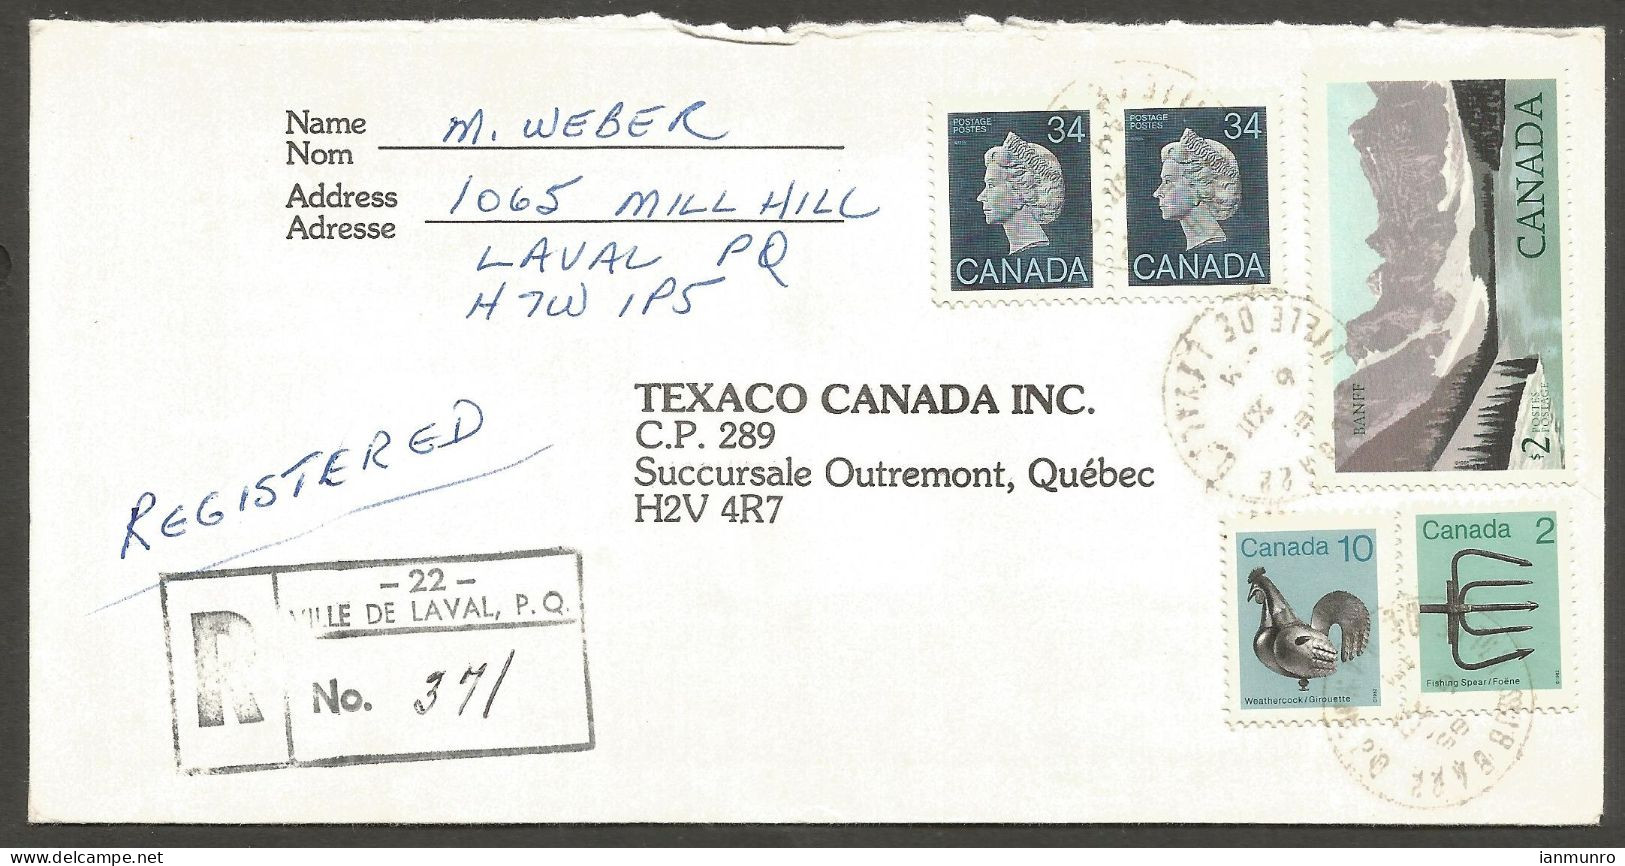 1985 Registered Cover $2.80 Kluane CDS Laval Sub 22 PQ Quebec Texaco Reply - Histoire Postale